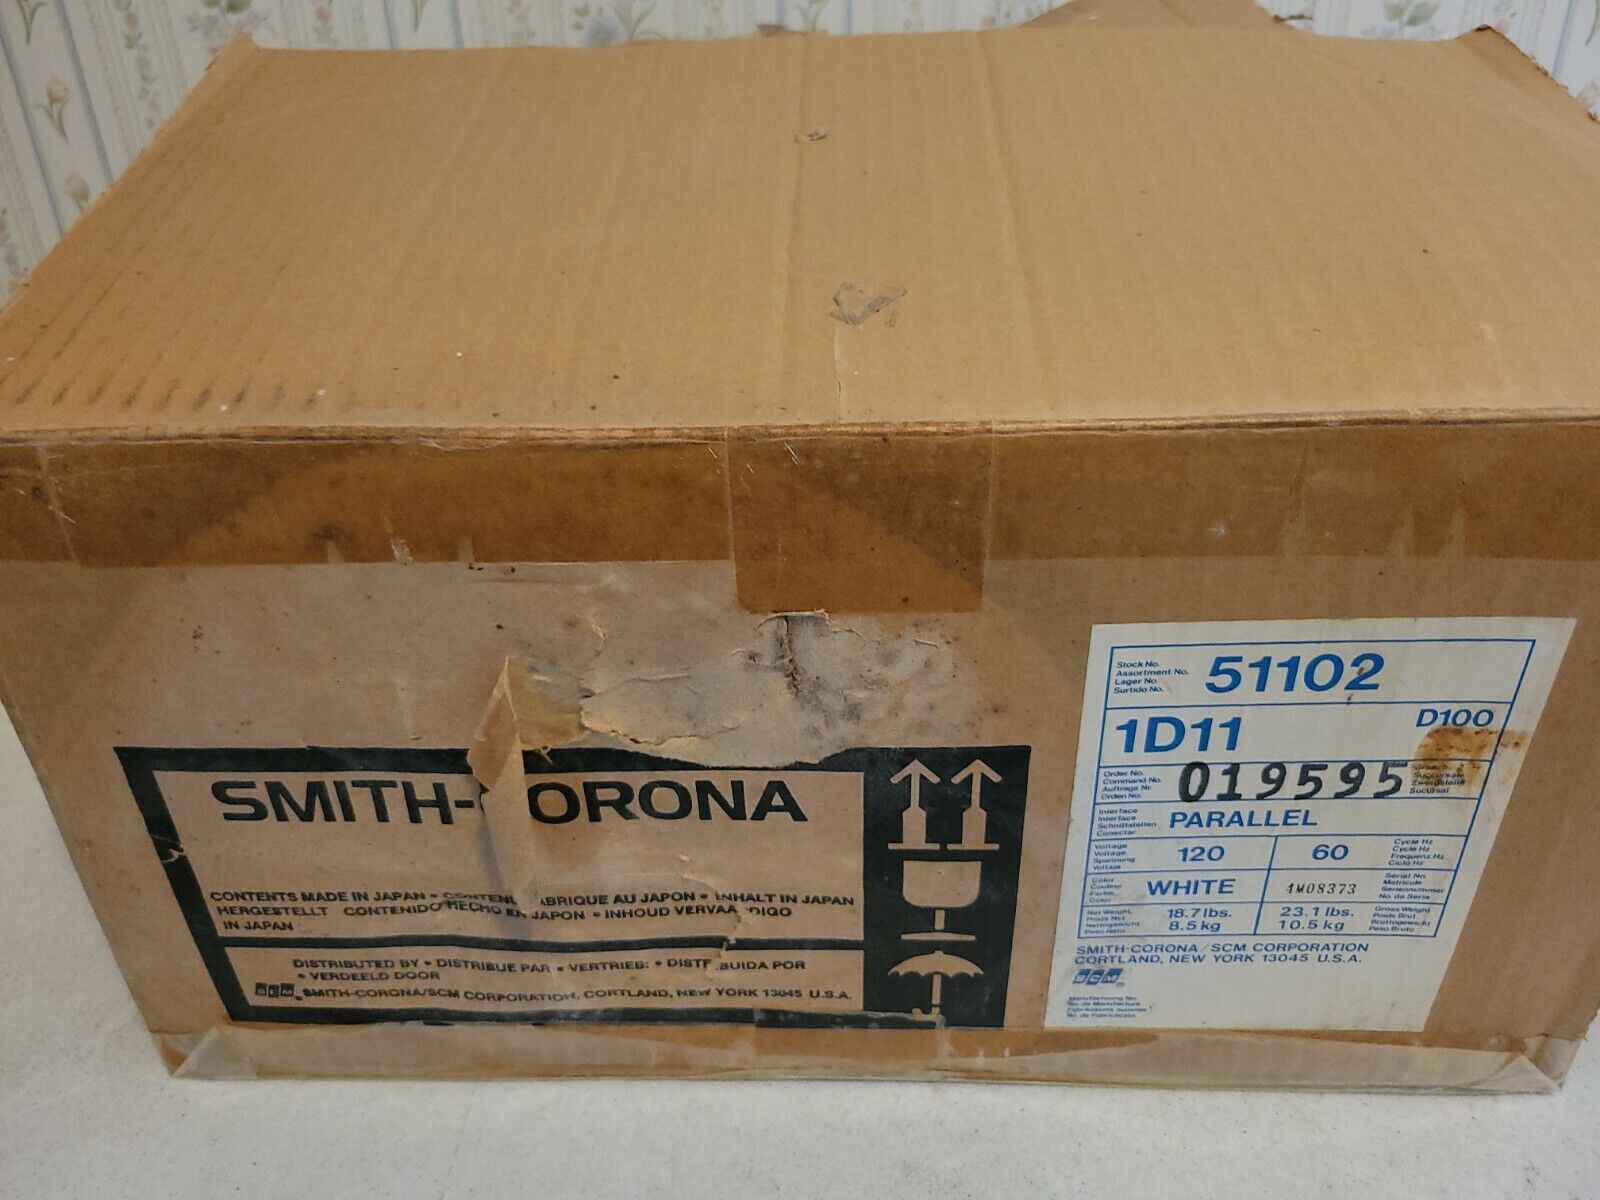 Vintage Smith Corona Dot Matrix Printer ID11 D100 51102 for Apple II Computer